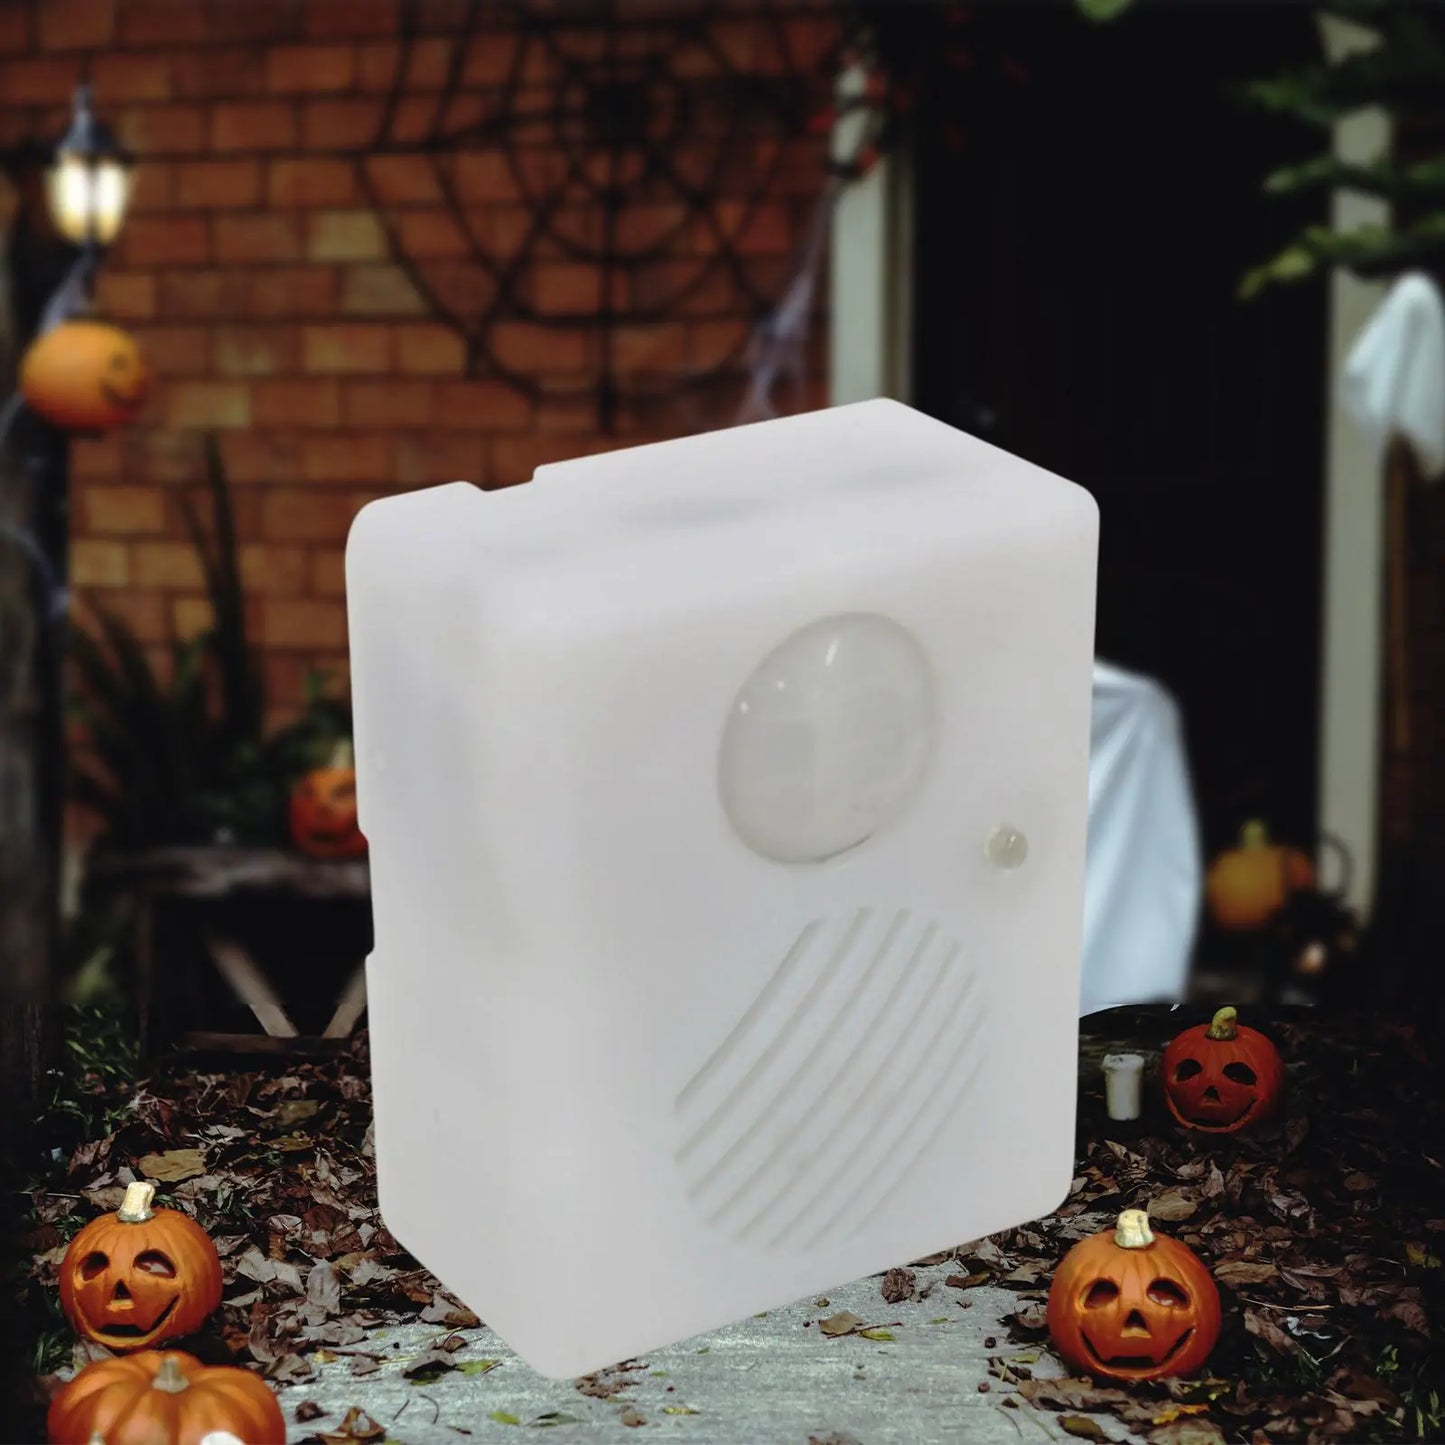 Halloween Sound Sensor Tricky Voice Activated Props Loudspeaker Noise Makers Horror PIR Motion Sensor Speaker for Shop